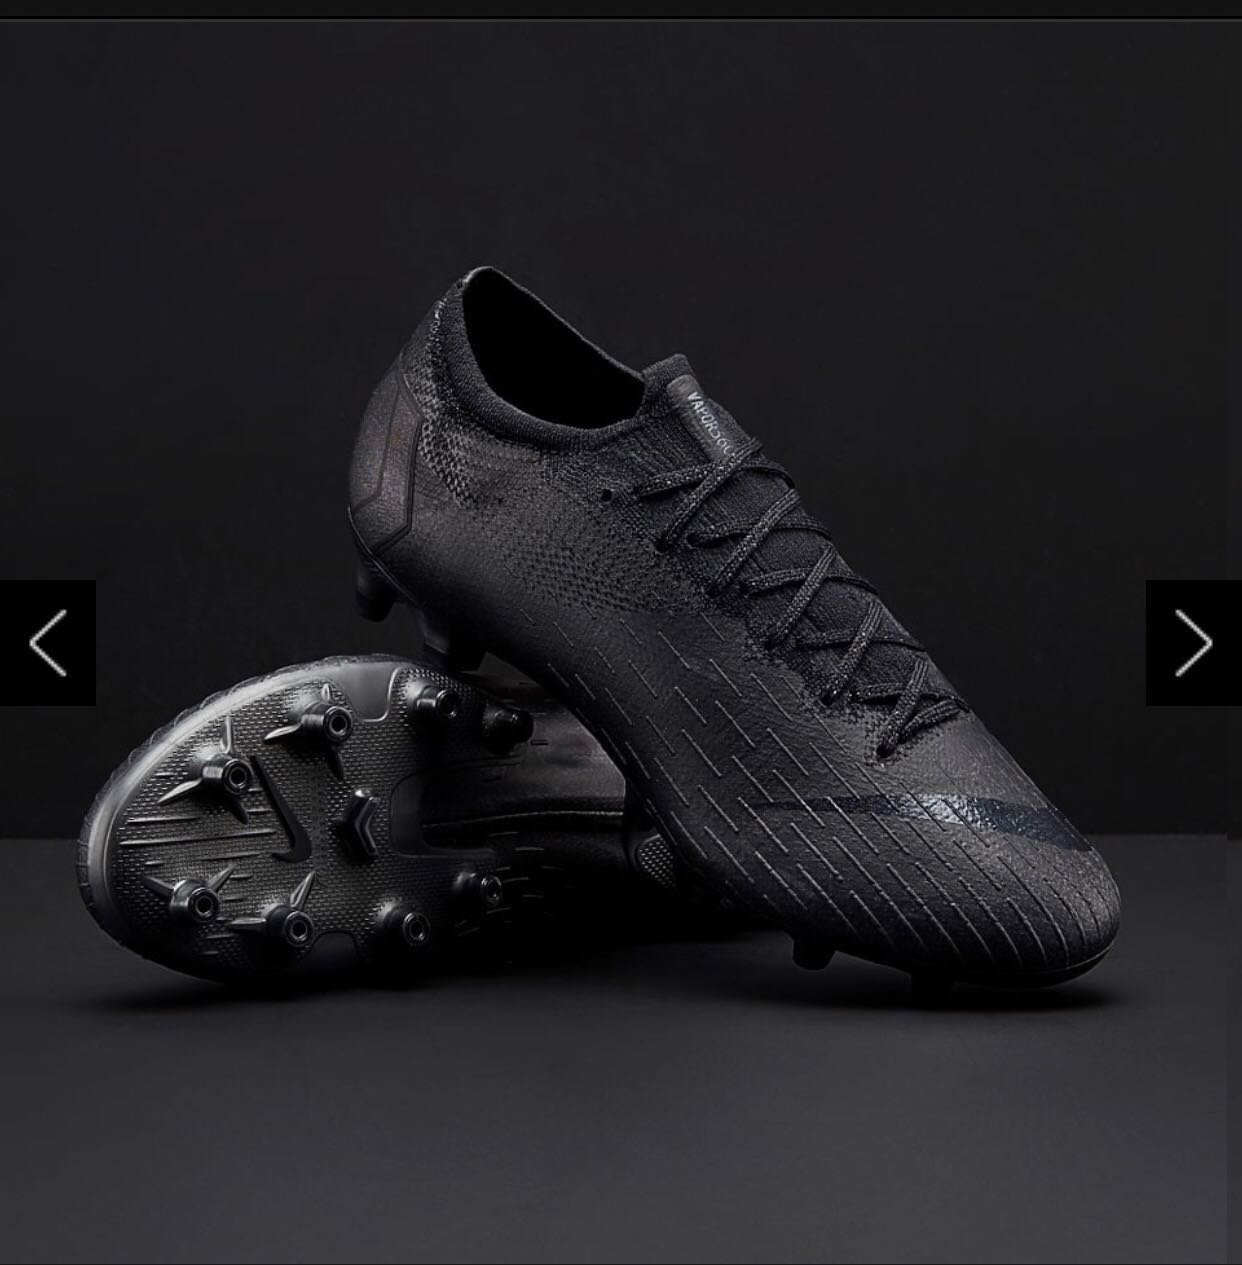 elite soccer boots